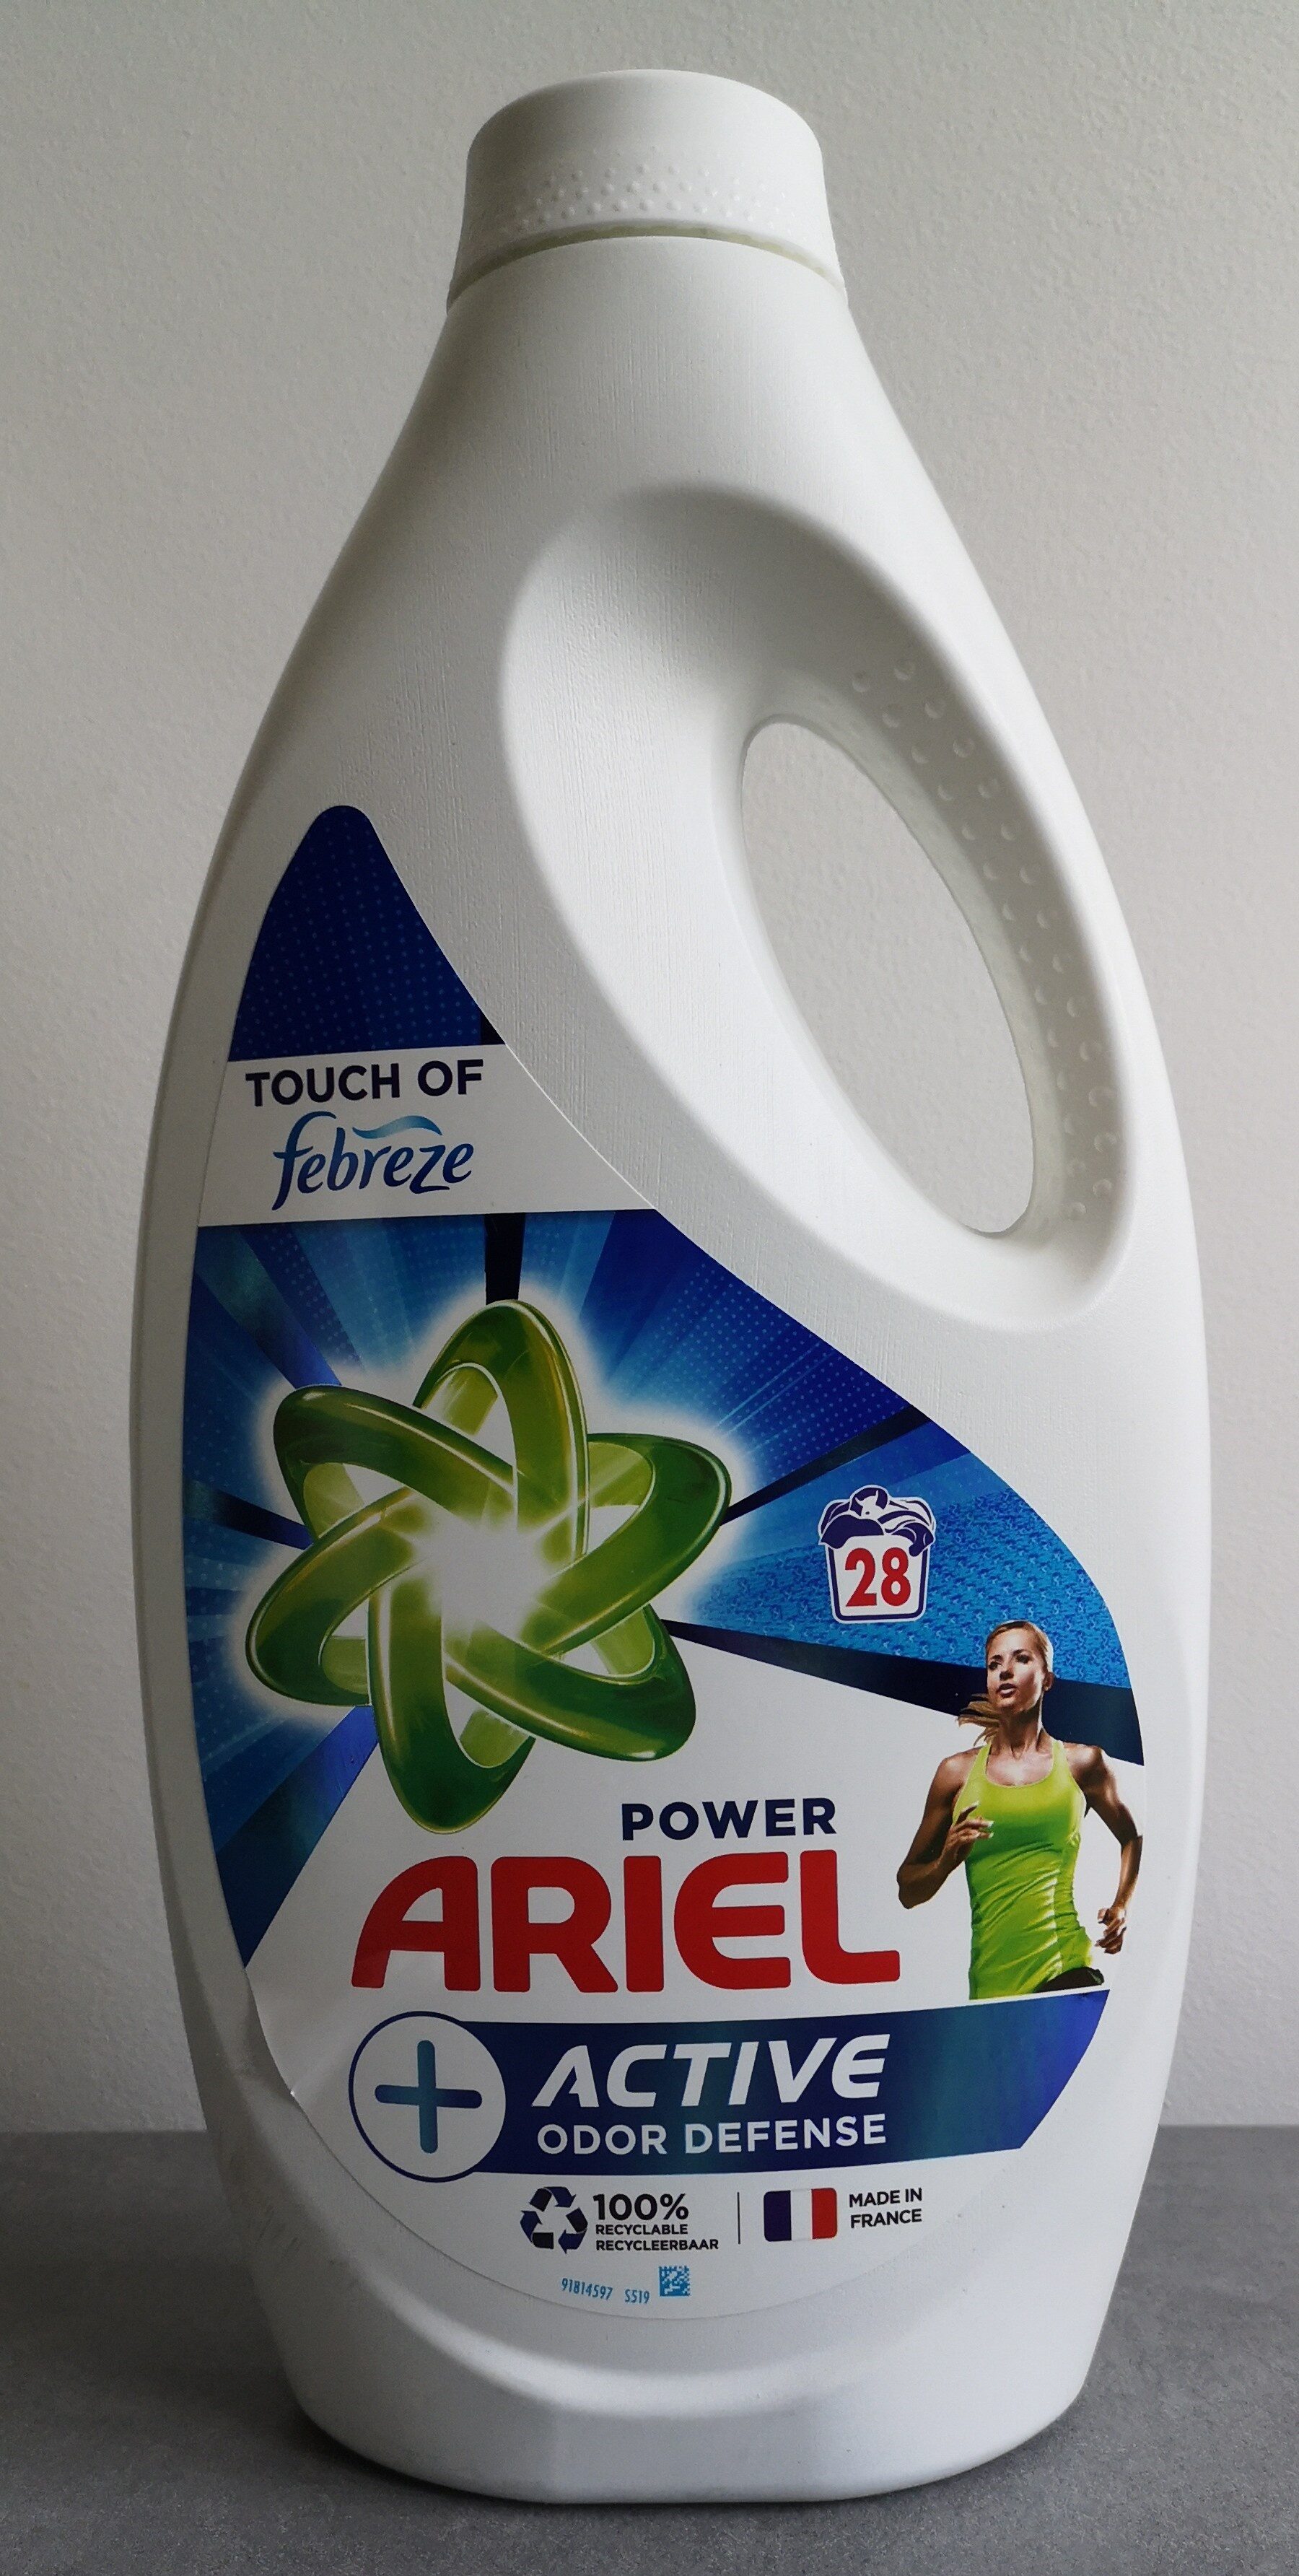 Power Ariel Active Odor Defense - Product - fr